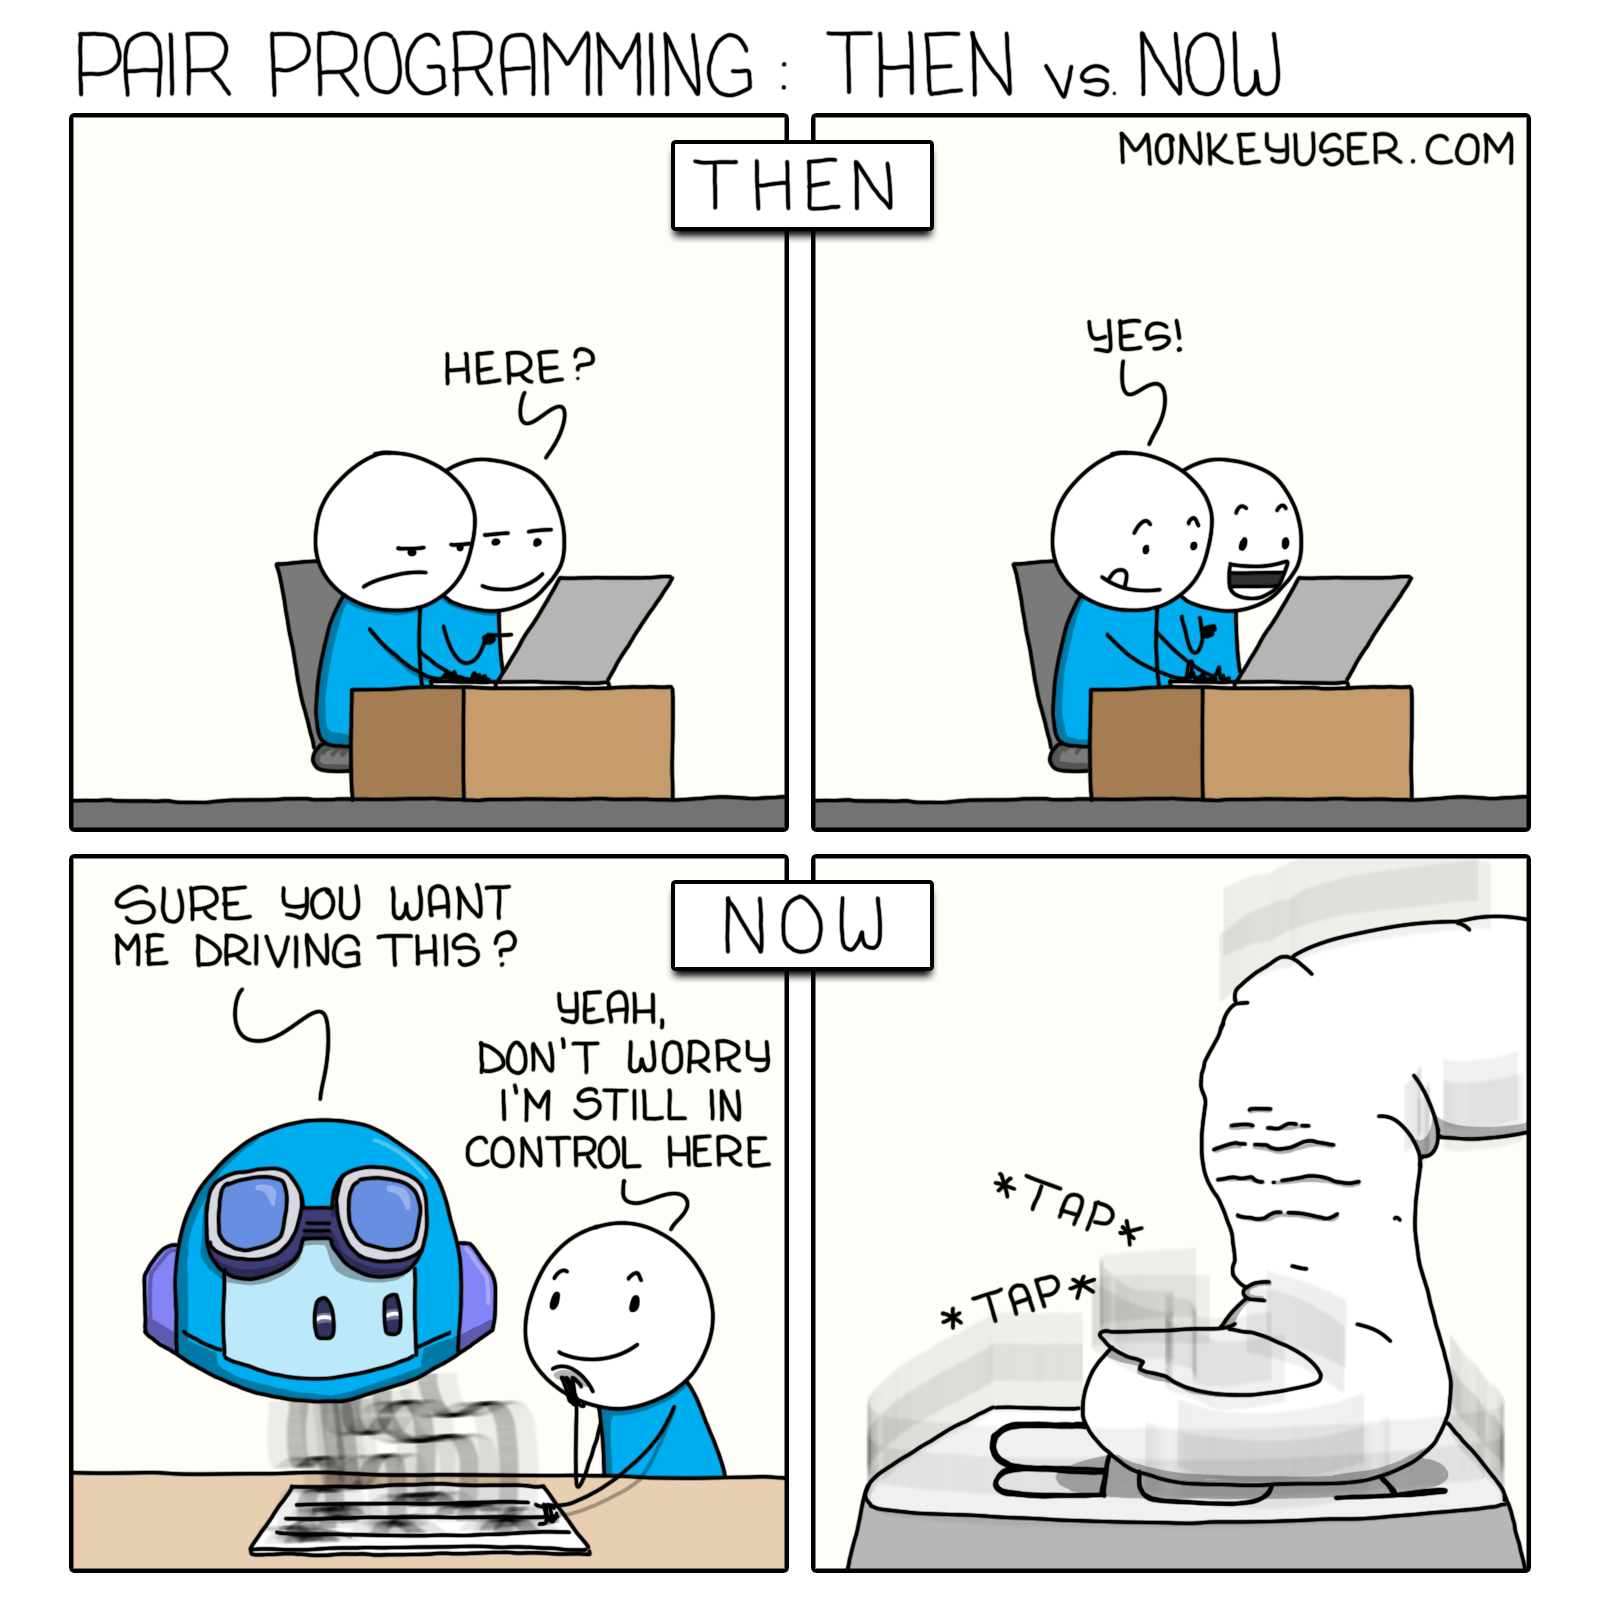 Pair Programming Then vs Now